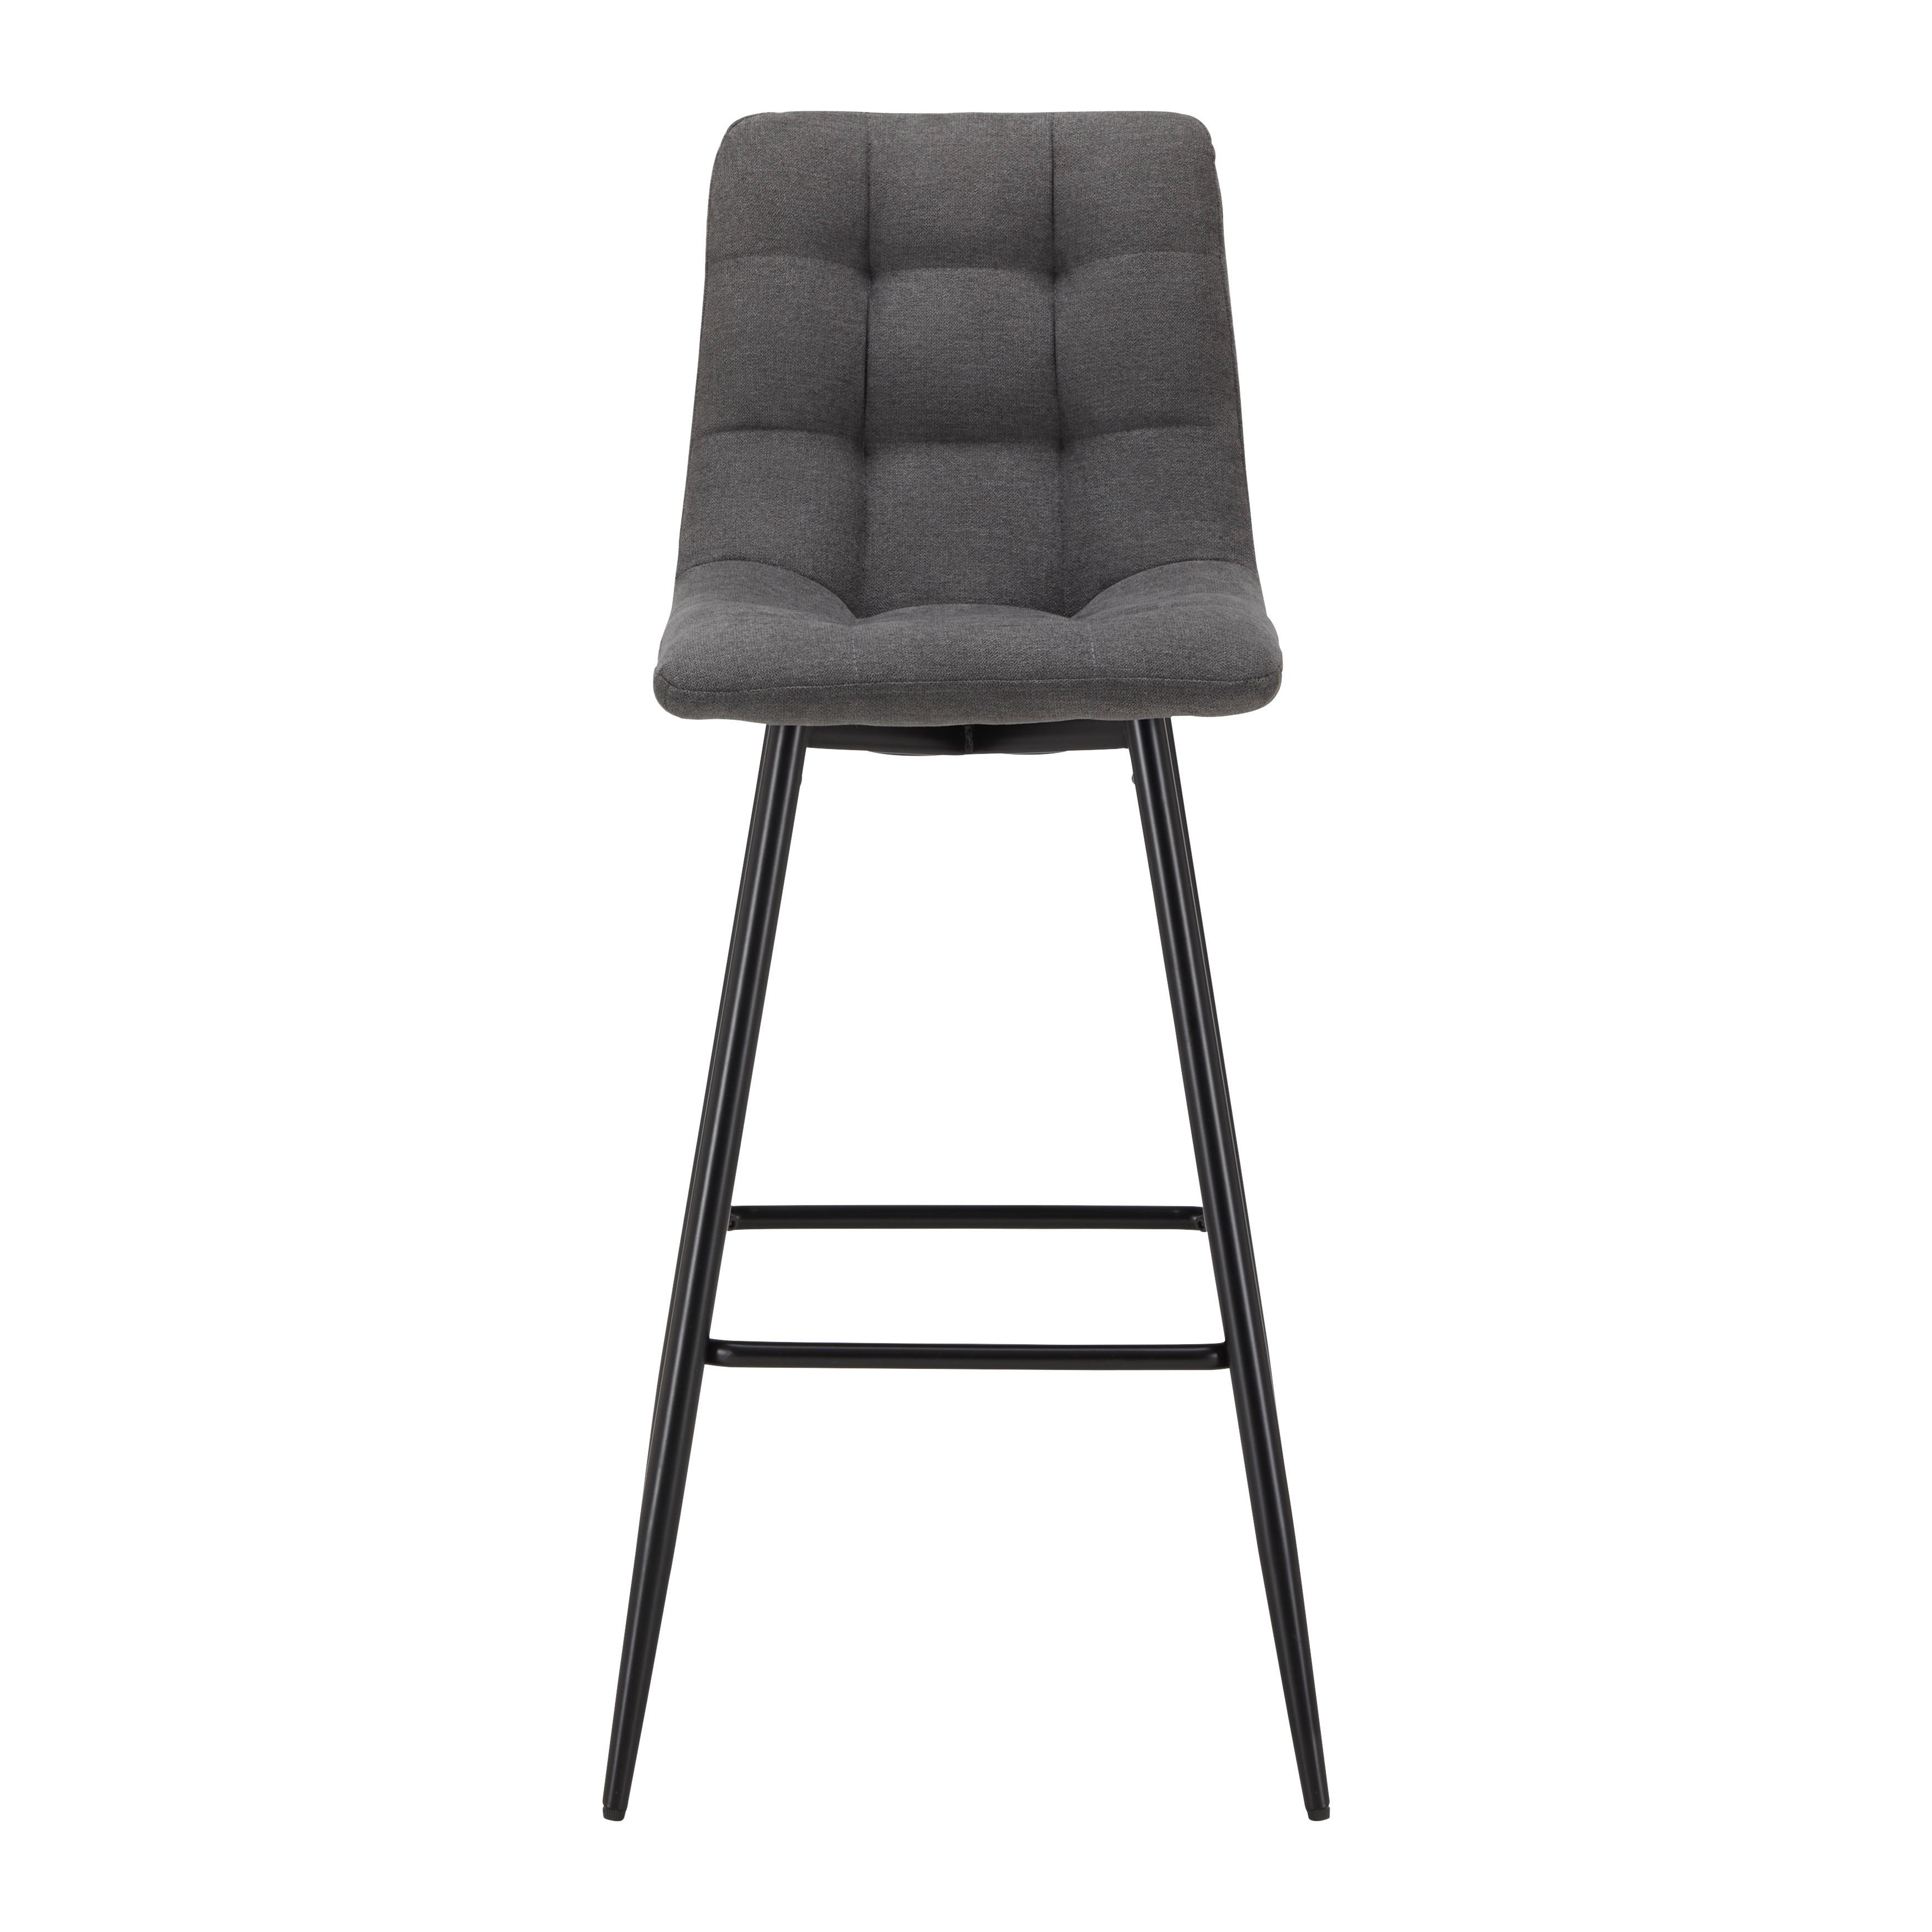 Sada Barových Židlí Luka Tmavěšedá - černá/tmavě šedá, Moderní, kov/dřevo (42,5/100/49cm) - P & B